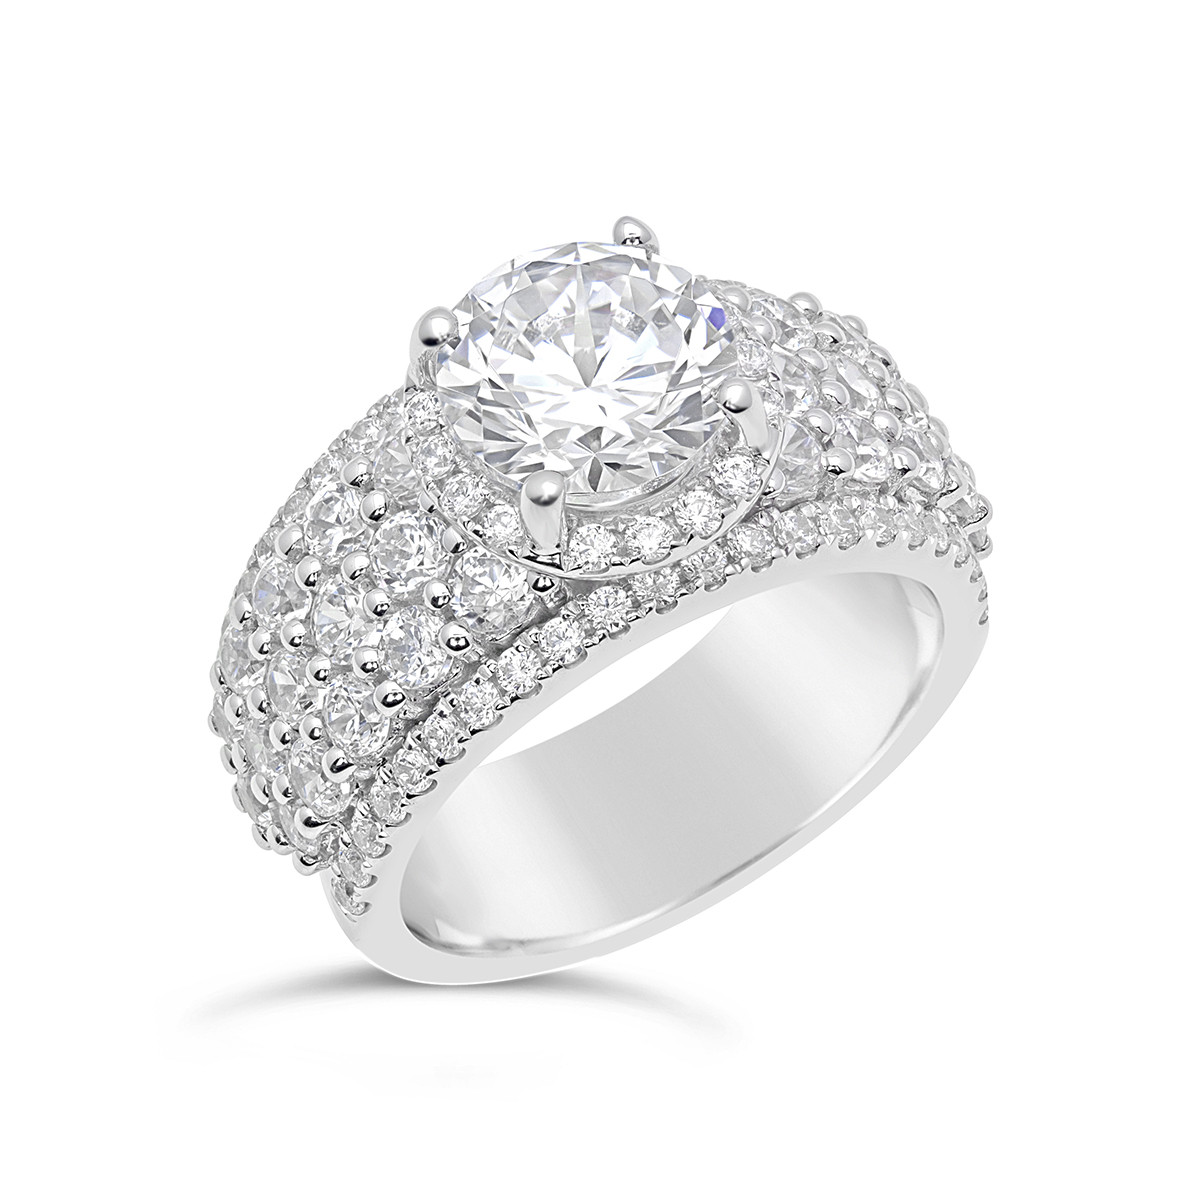 Wide Band Rings With Diamonds
 Diamond Halo Engagement Ring with Wide Band The Diamond